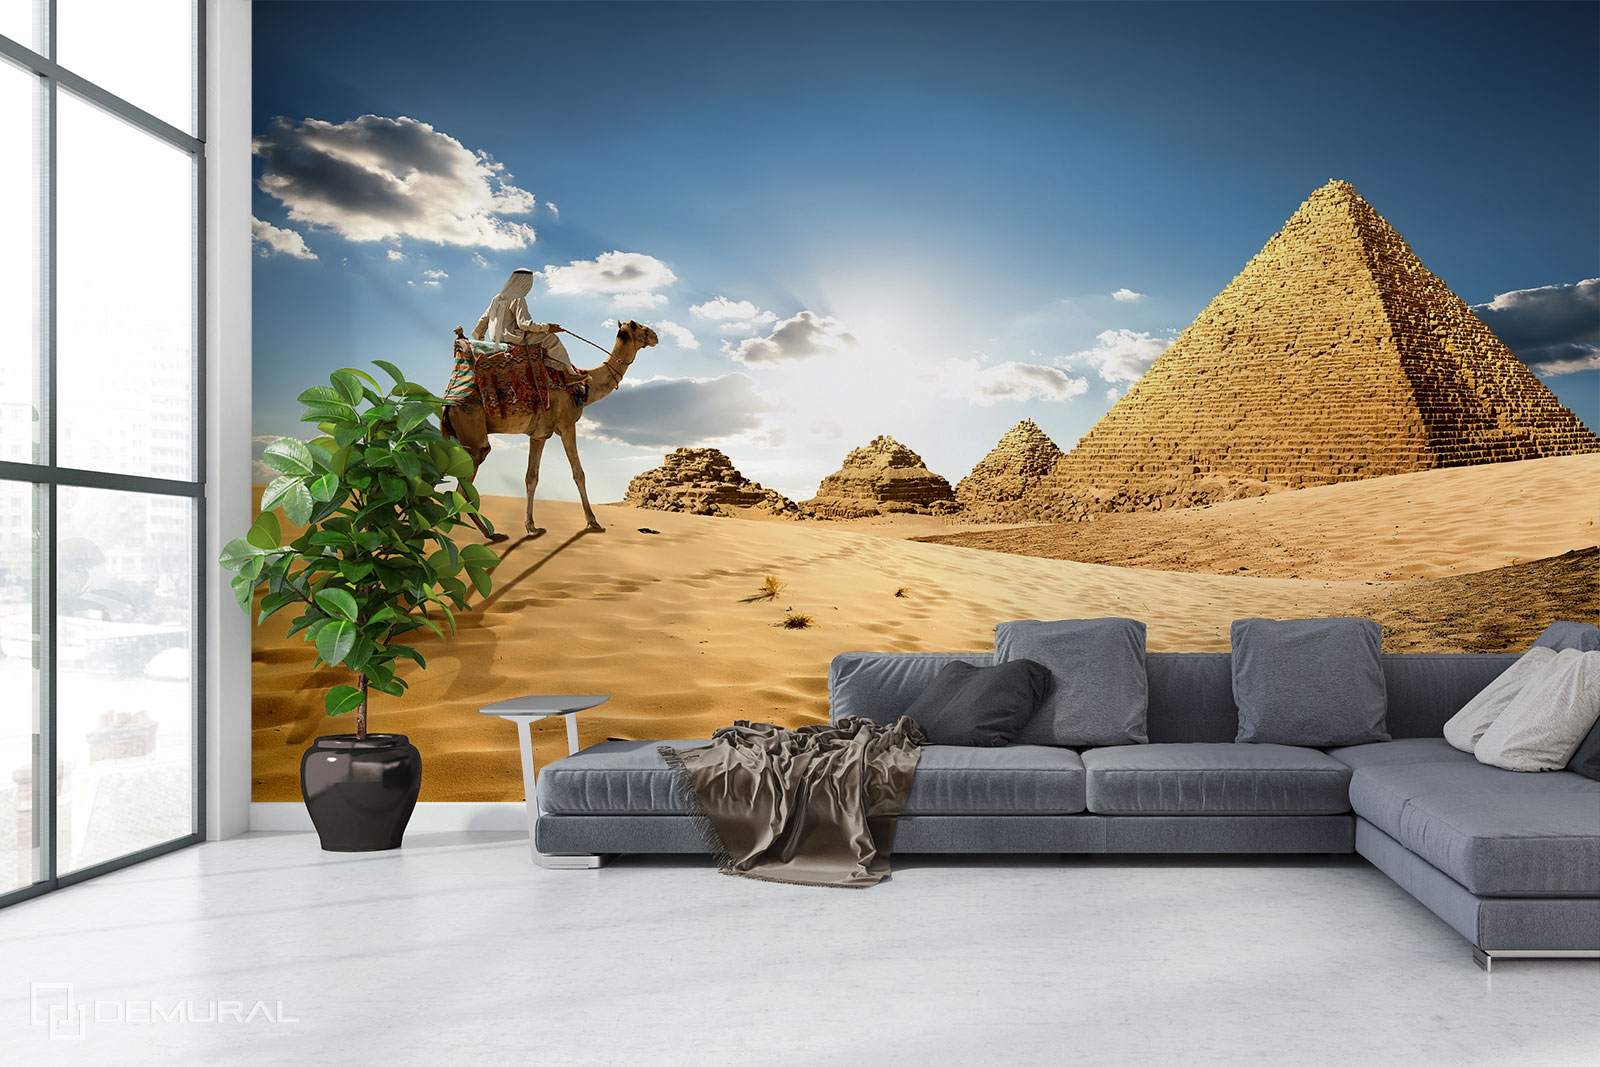 Fototapeta "Ku piramidom" - Fototapety Egipt - Demural